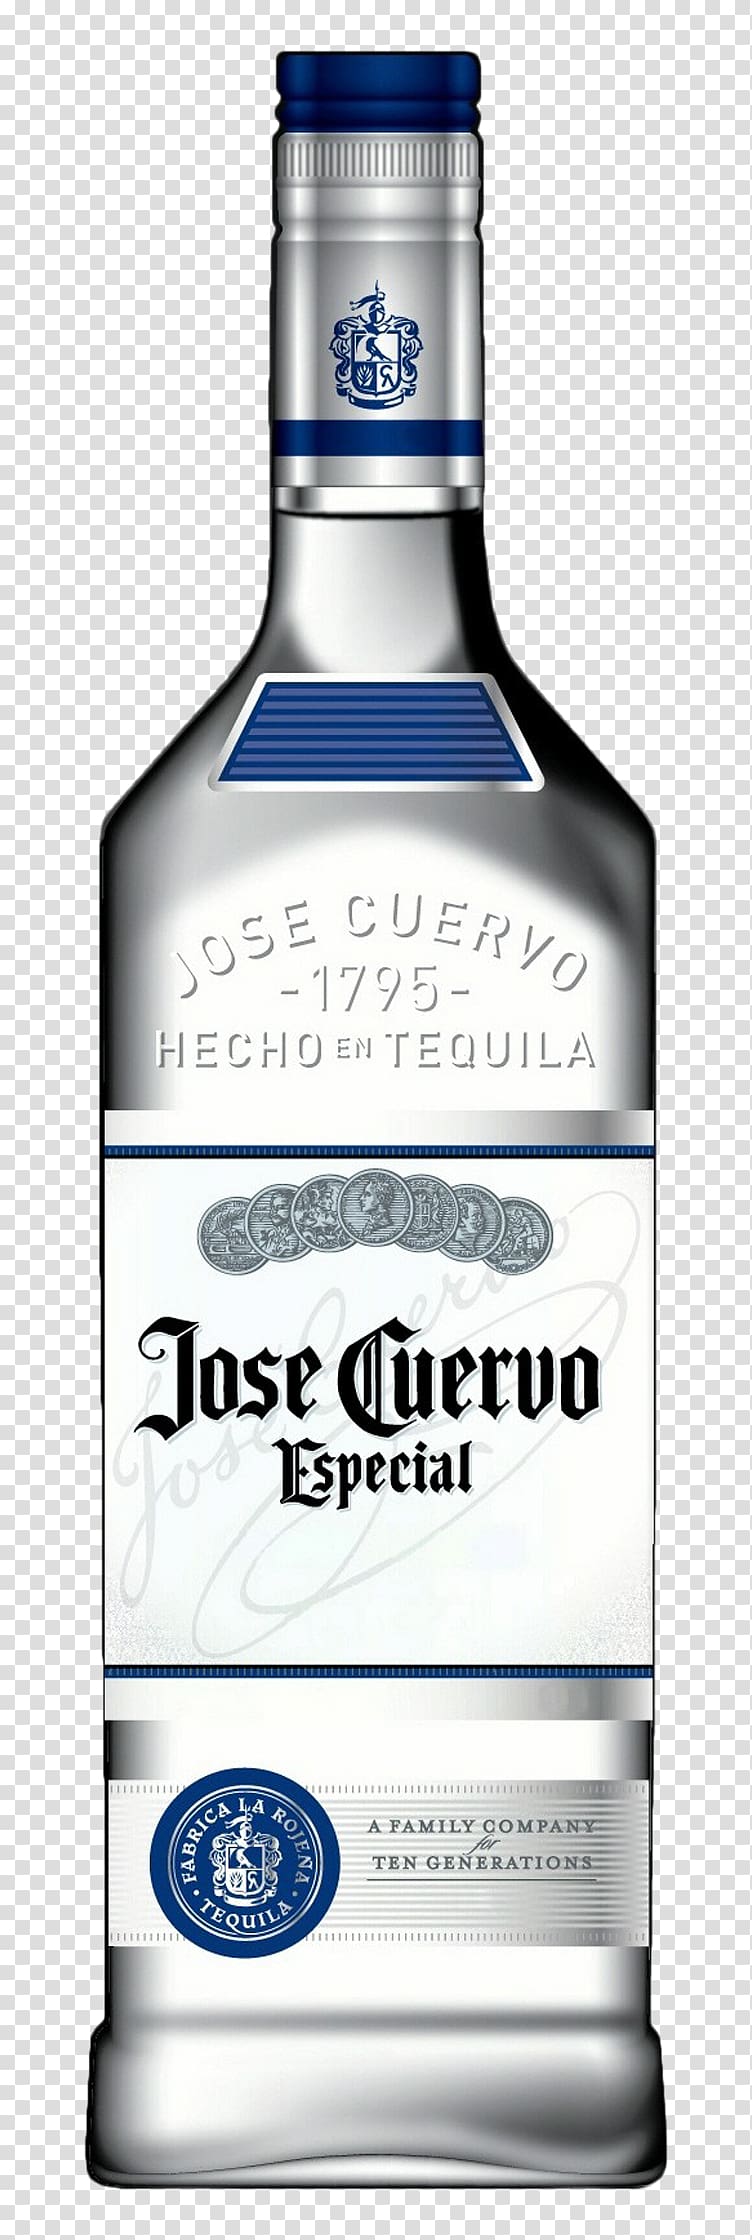 Jose Cuervo Especial Silver Tequila Liquor Jose Cuervo Especial Silver Tequila, tequila transparent background PNG clipart